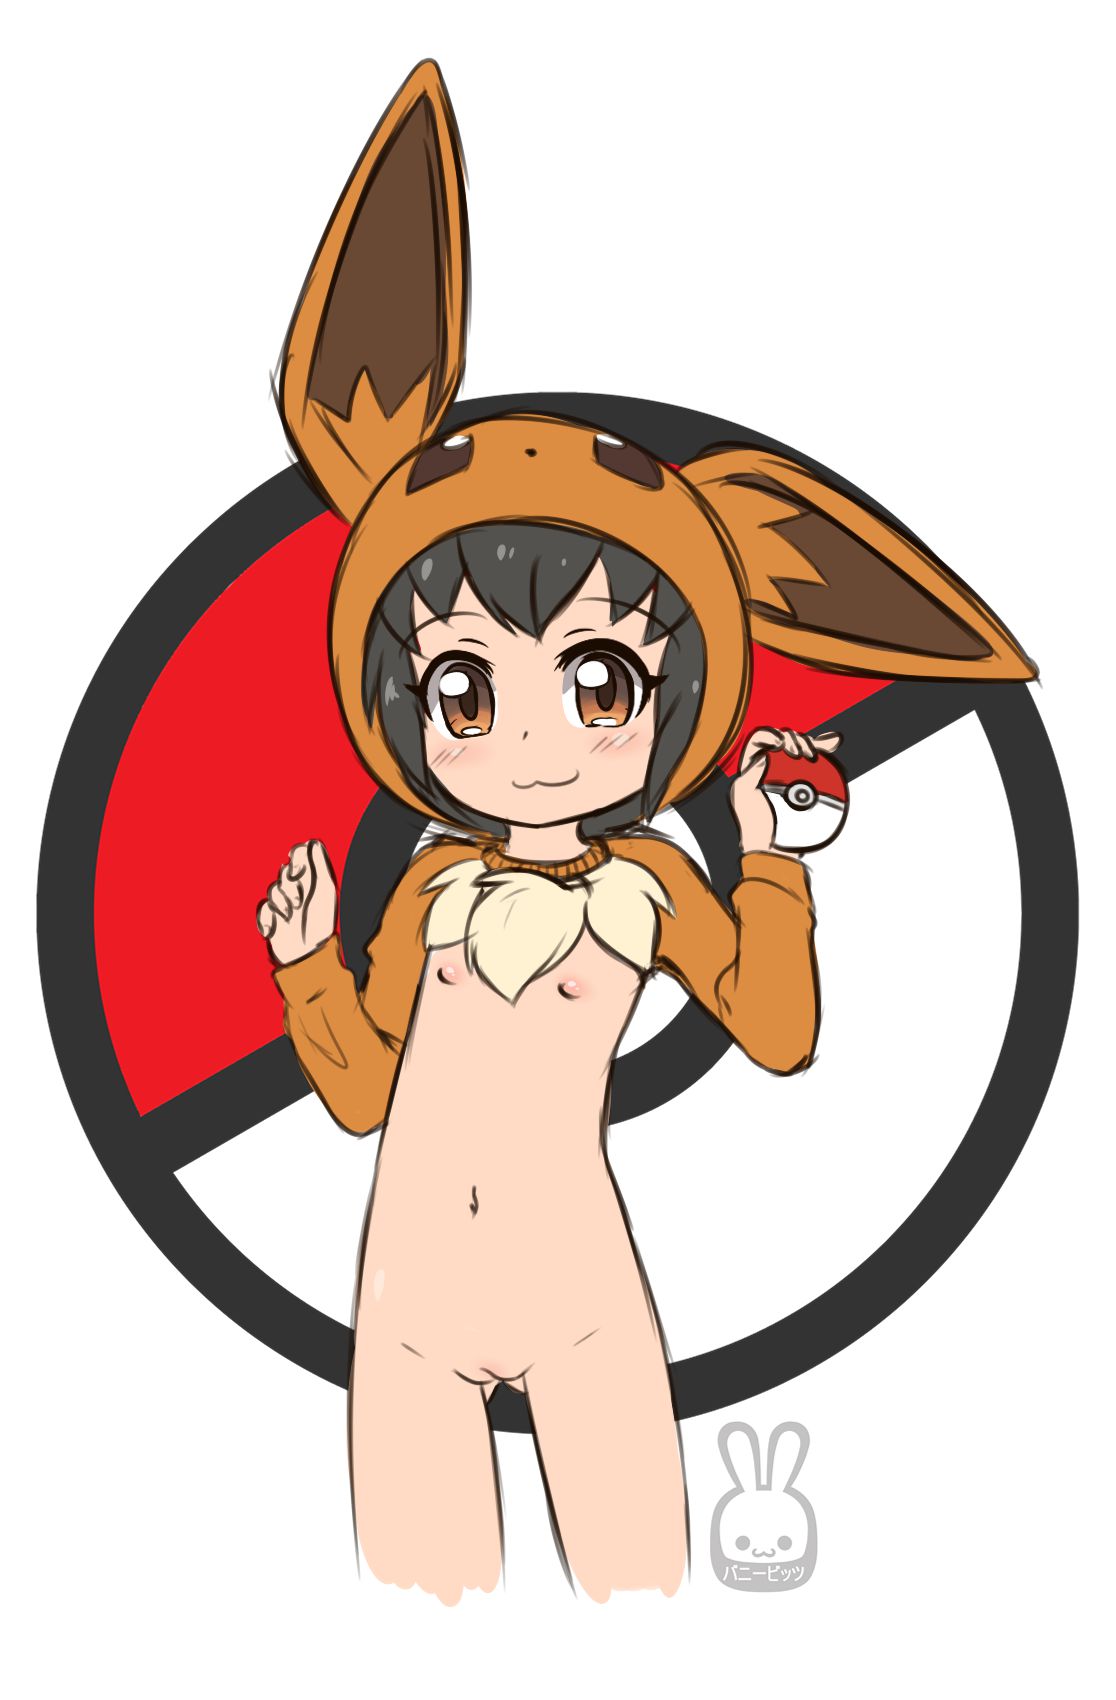 [Pokemon Play-chan] Ebui Cosplay Cute Lori Trainer Pokemon Go-chan Erotic Image of Pokemon Sword Shield 17